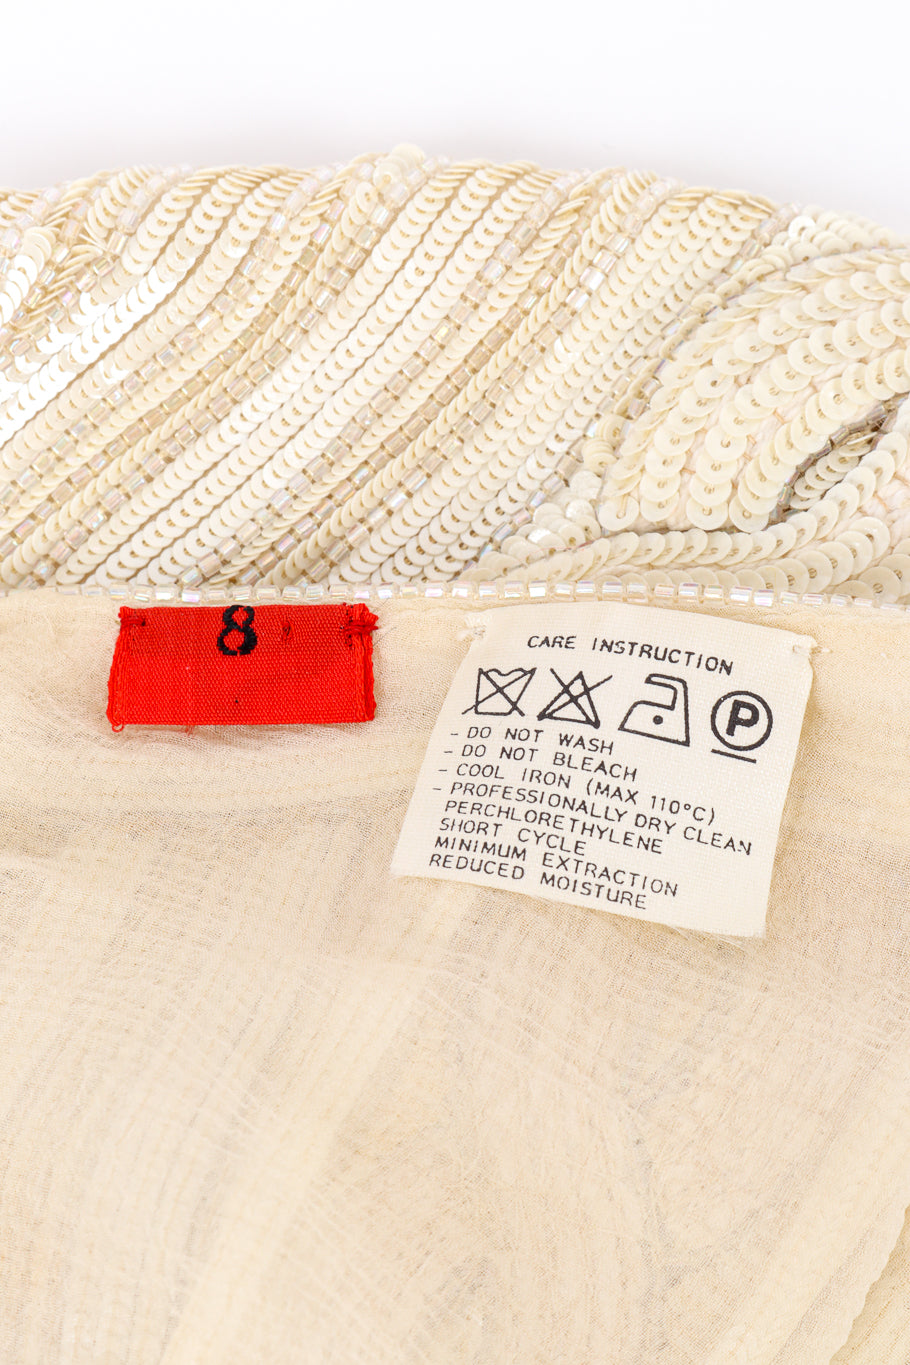 Vintage Valentino Night Cable Knit Sequin Top size tag closeup @recessla